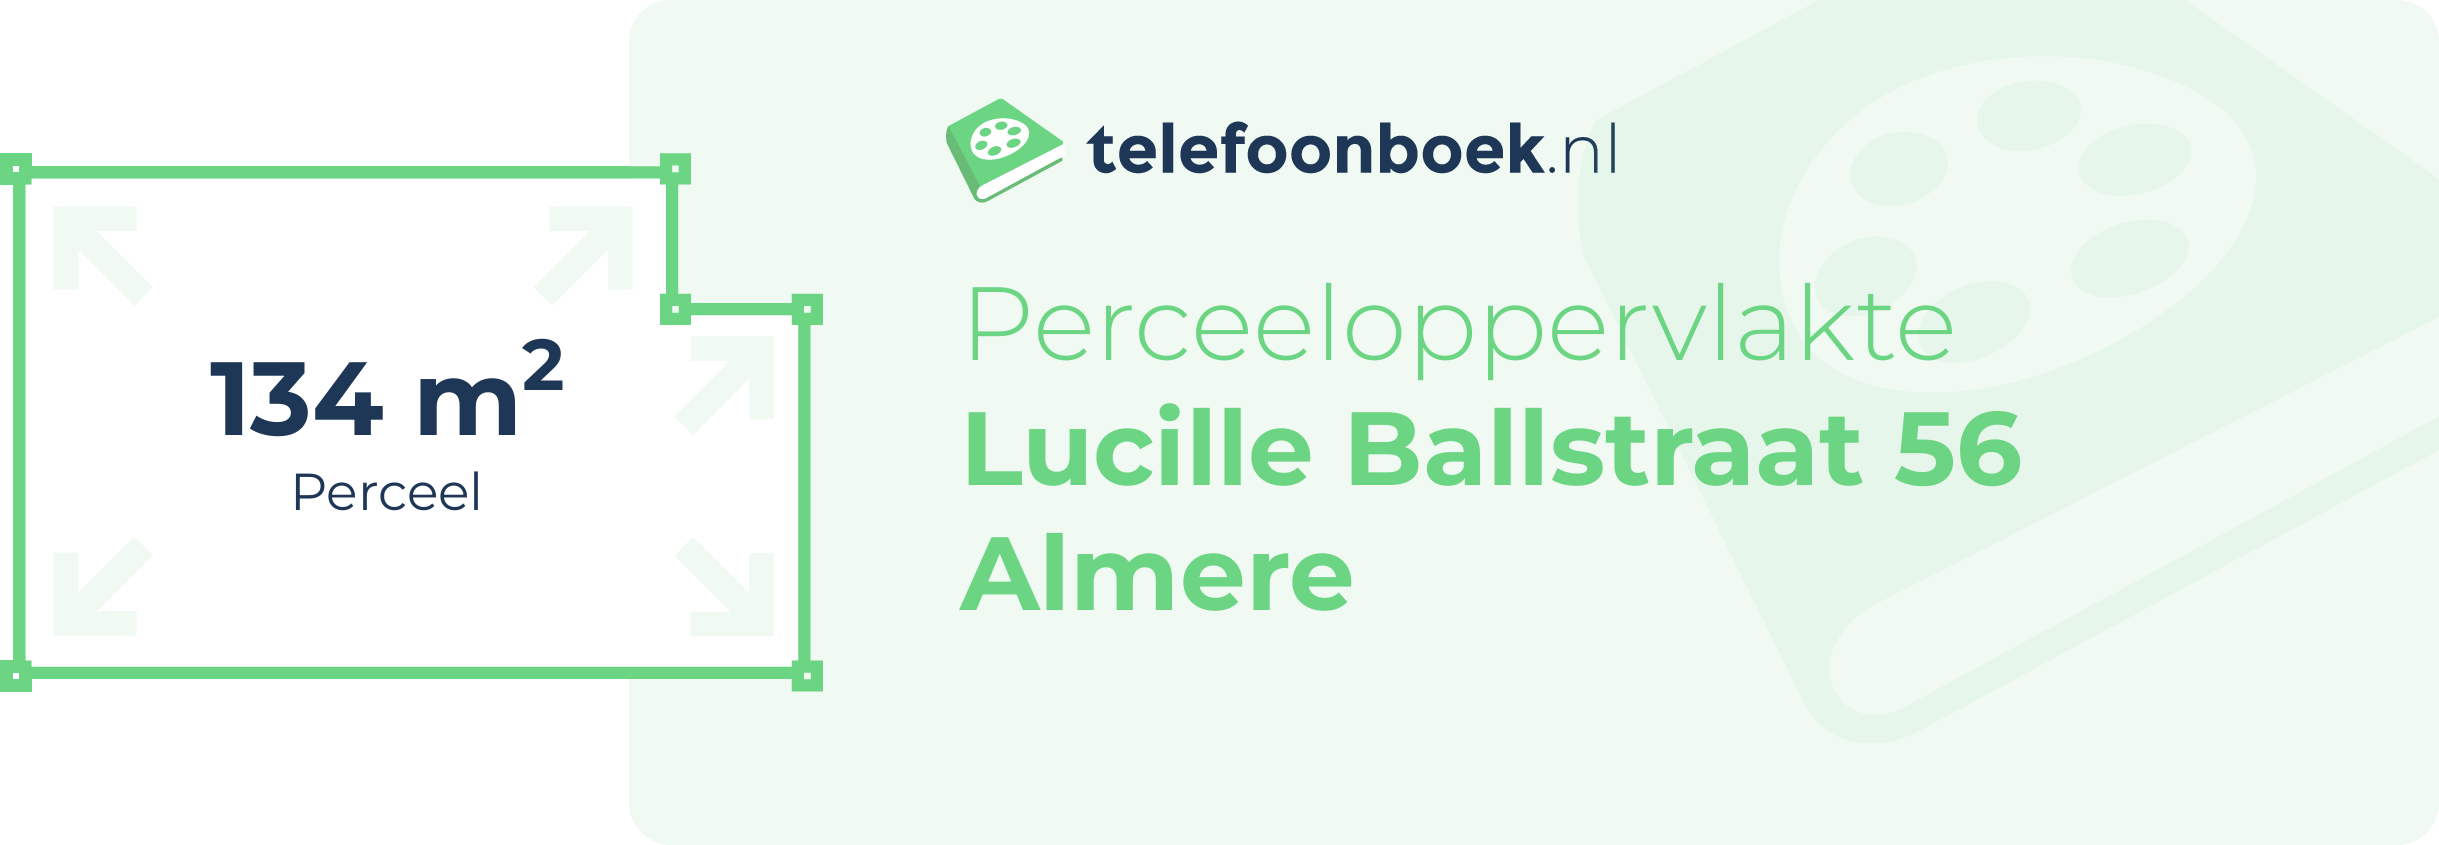 Perceeloppervlakte Lucille Ballstraat 56 Almere